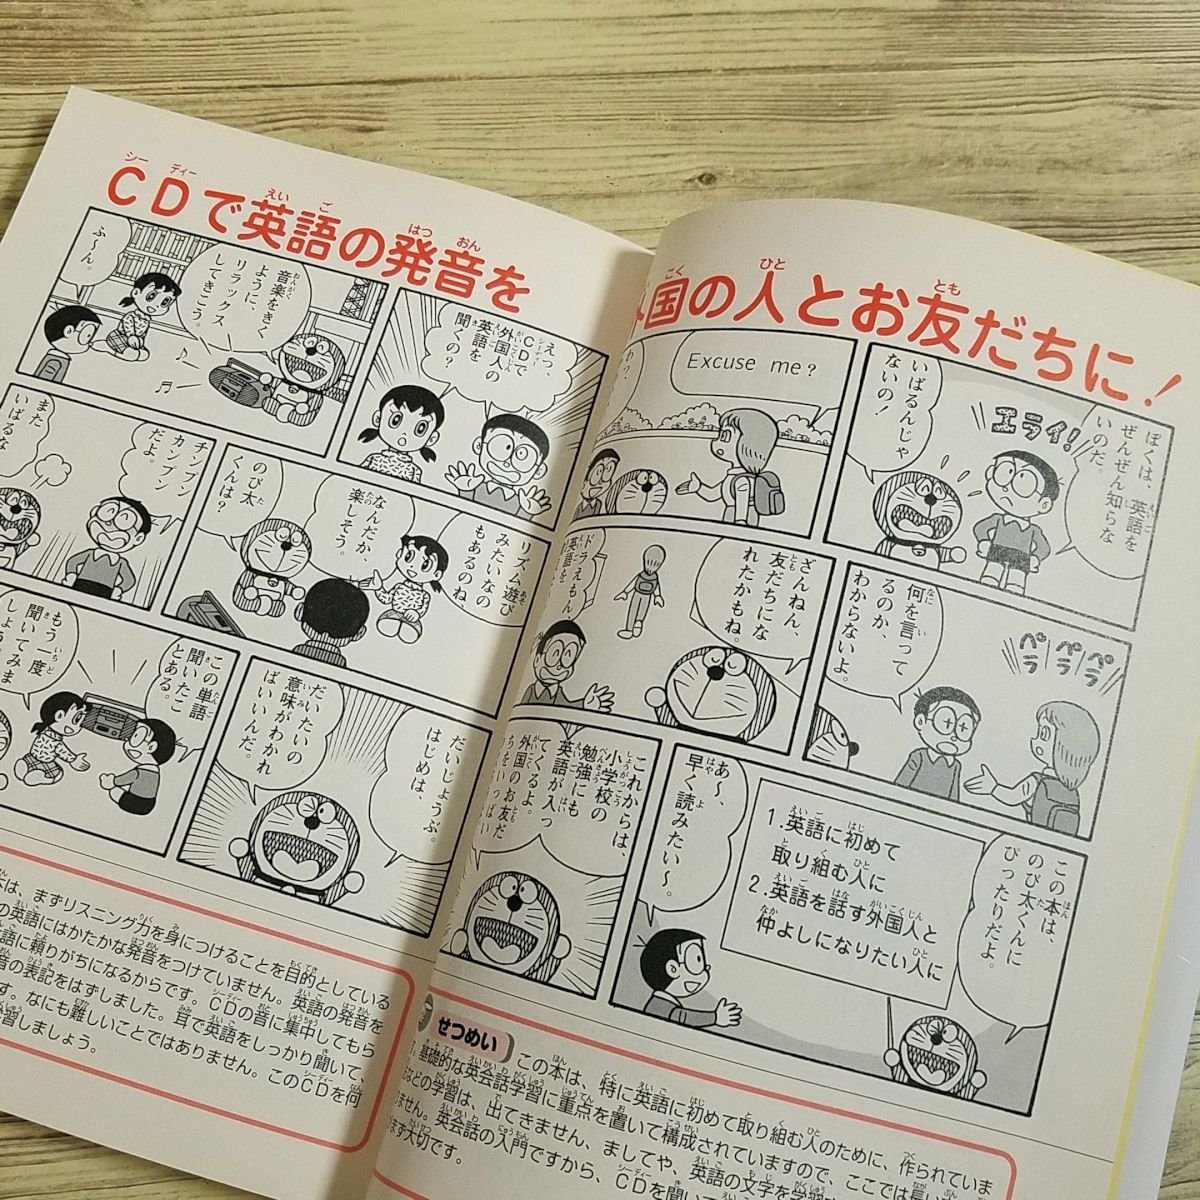  study manga [ Doraemon comfortably English conversation comics introduction compilation no. 1 volume (CD attaching )] learning English .[ postage 180 jpy ]